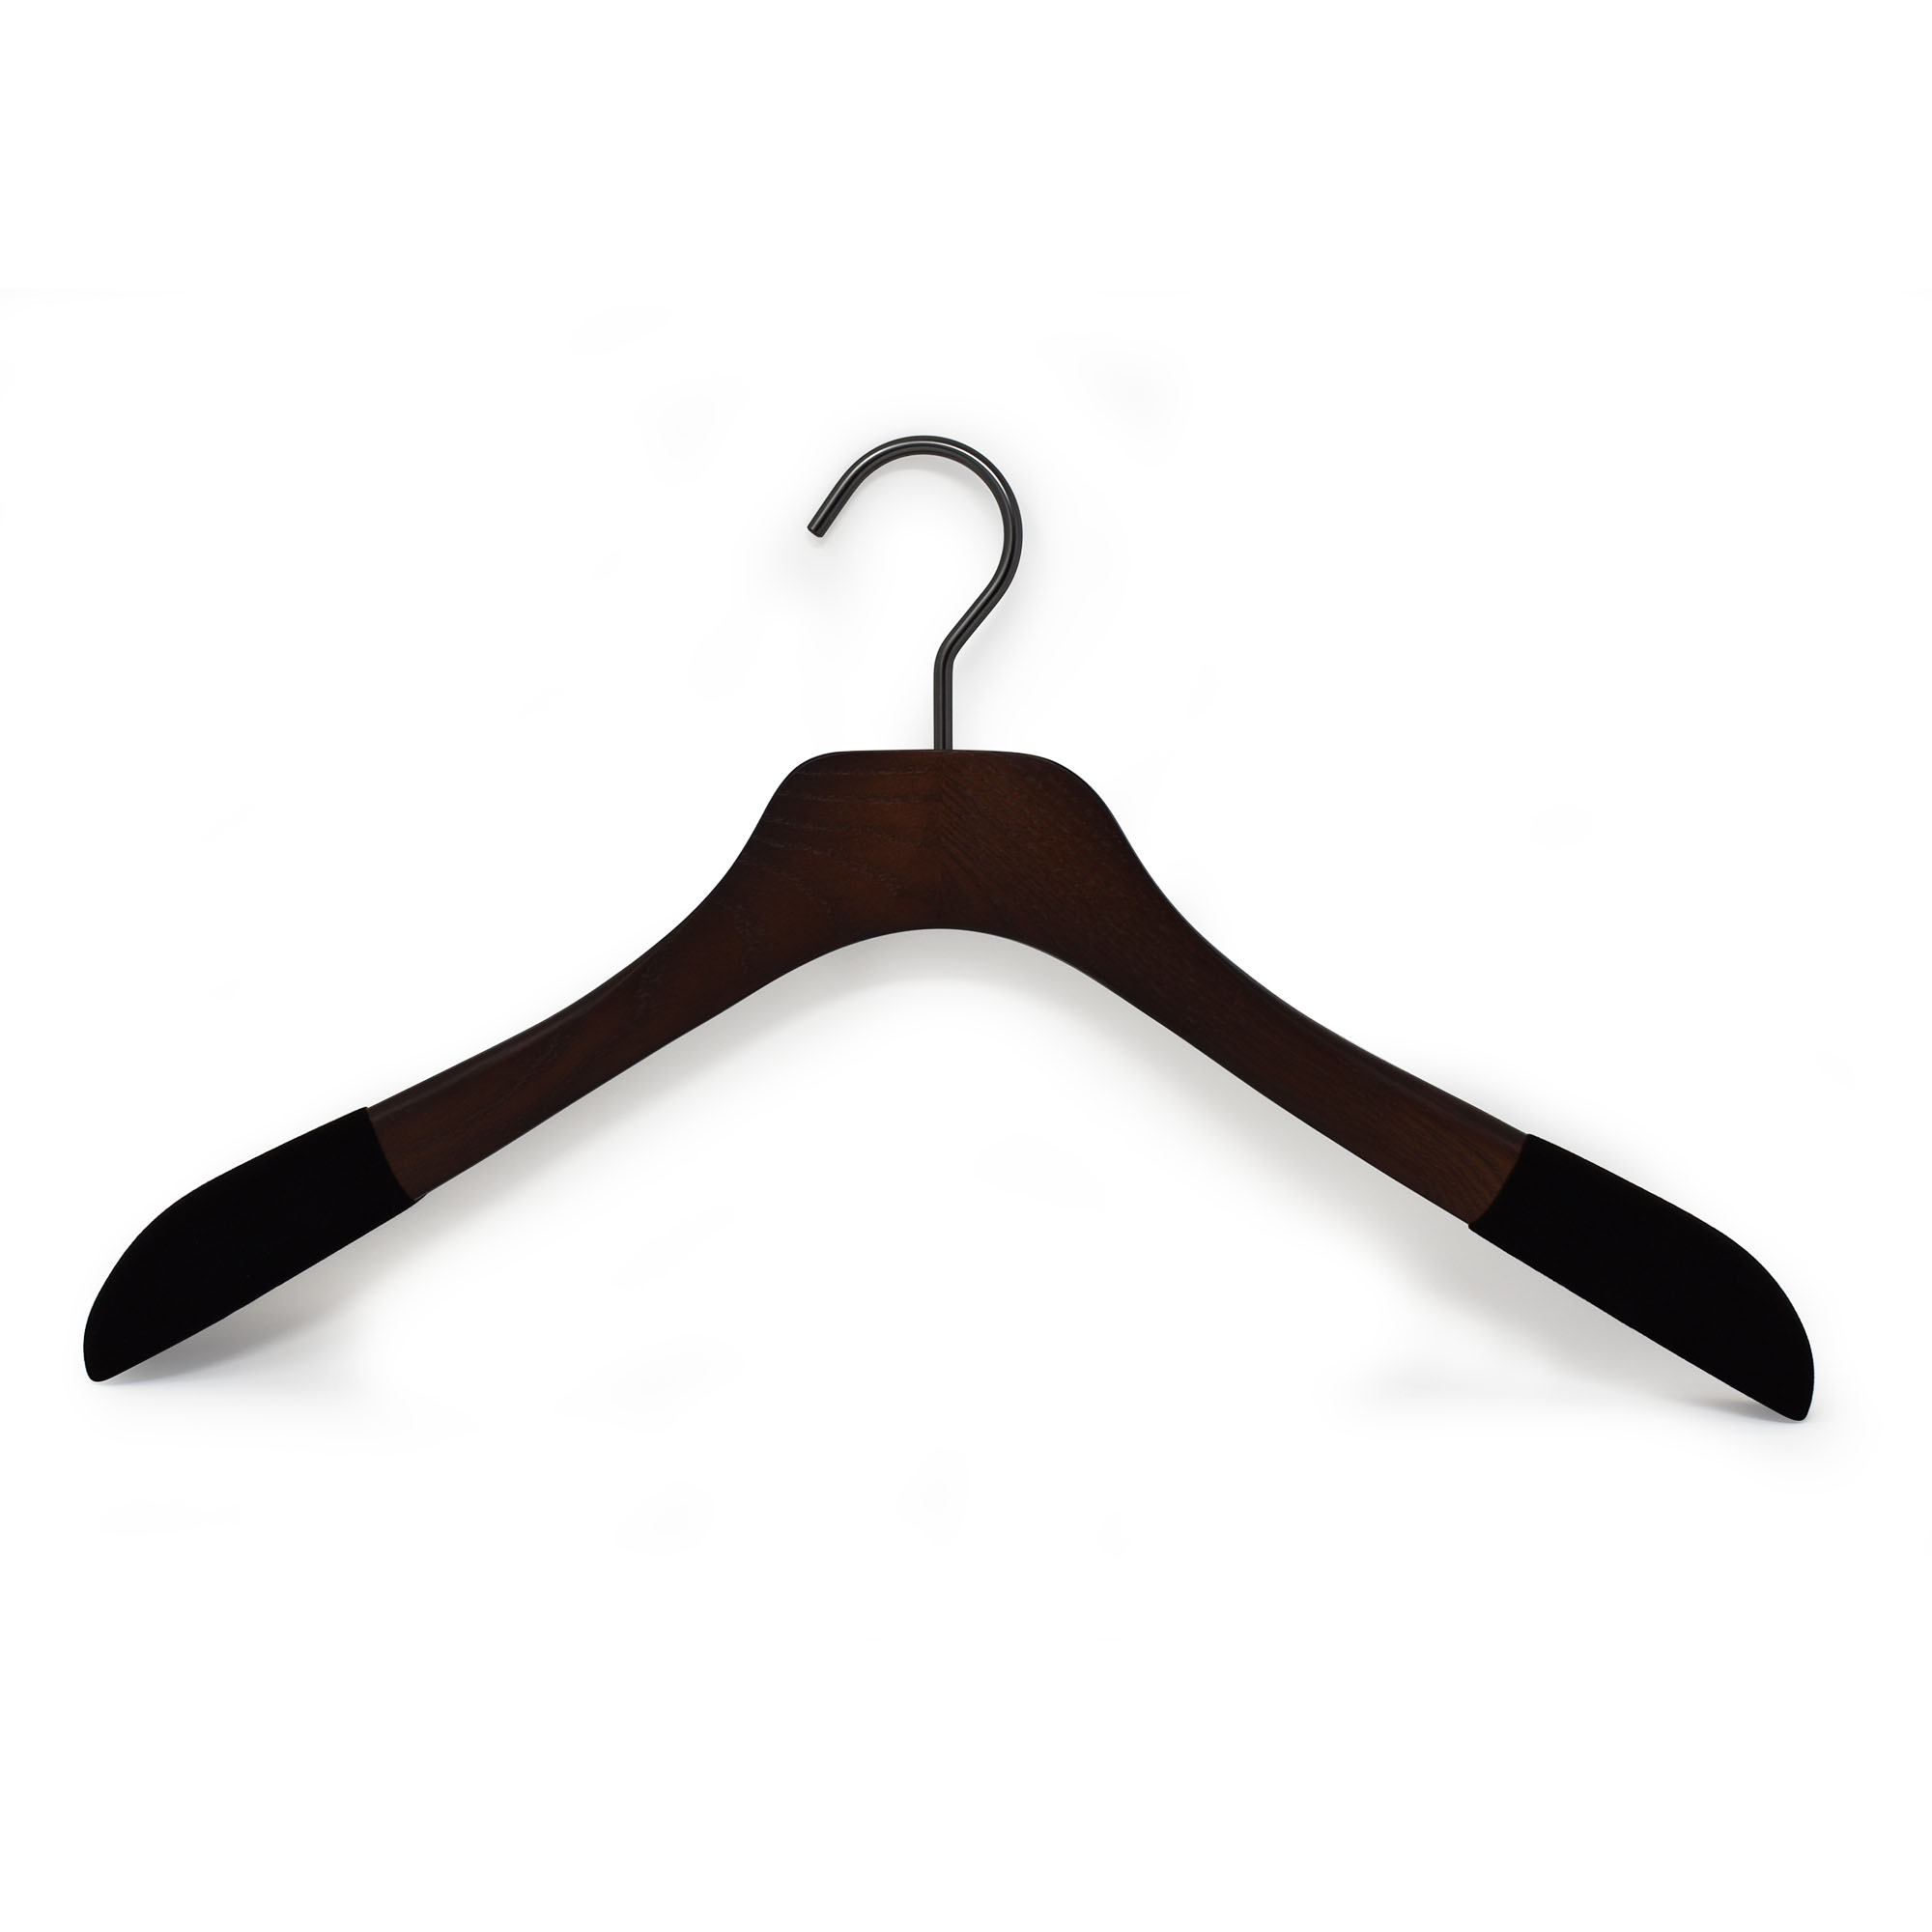 wooden hangers for men's shirt with anti-slip